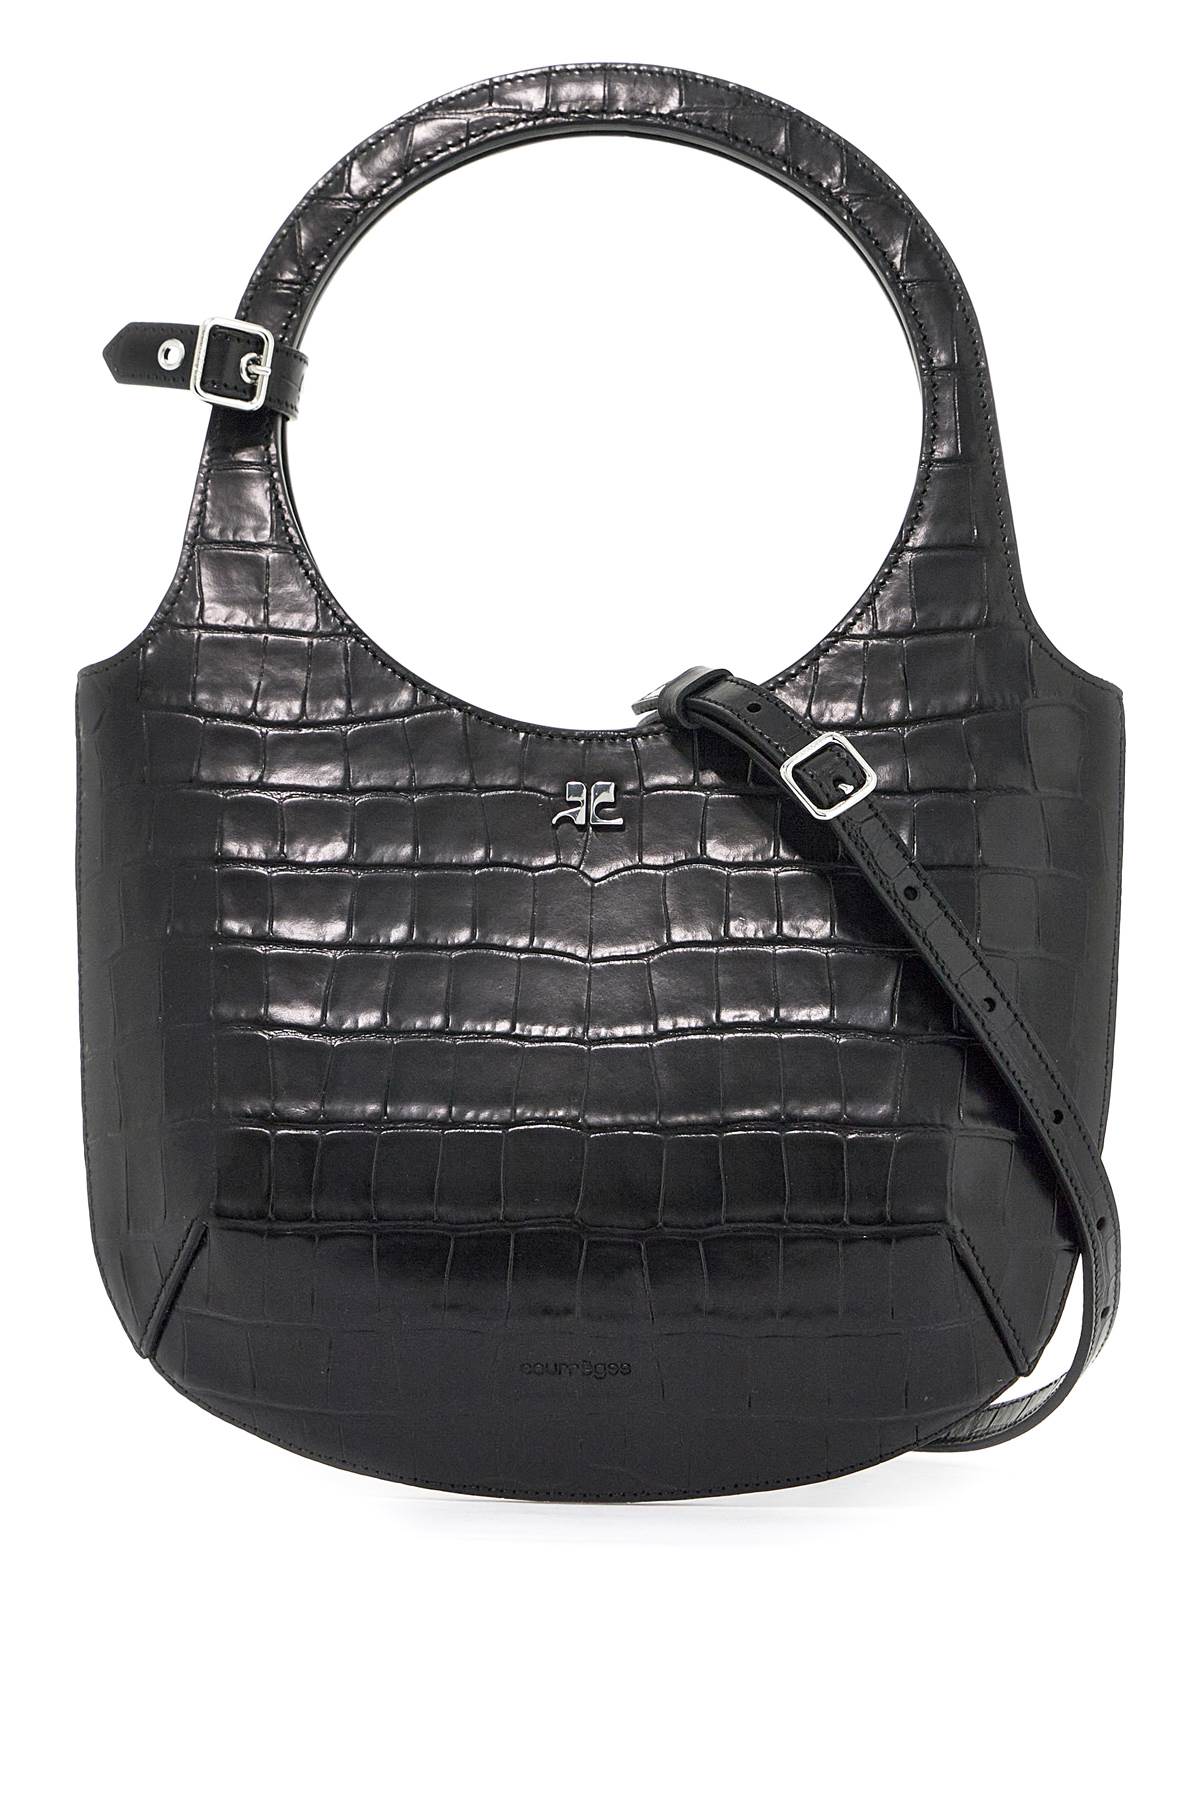 Courrèges COURREGES "handbag with holy crocodile print